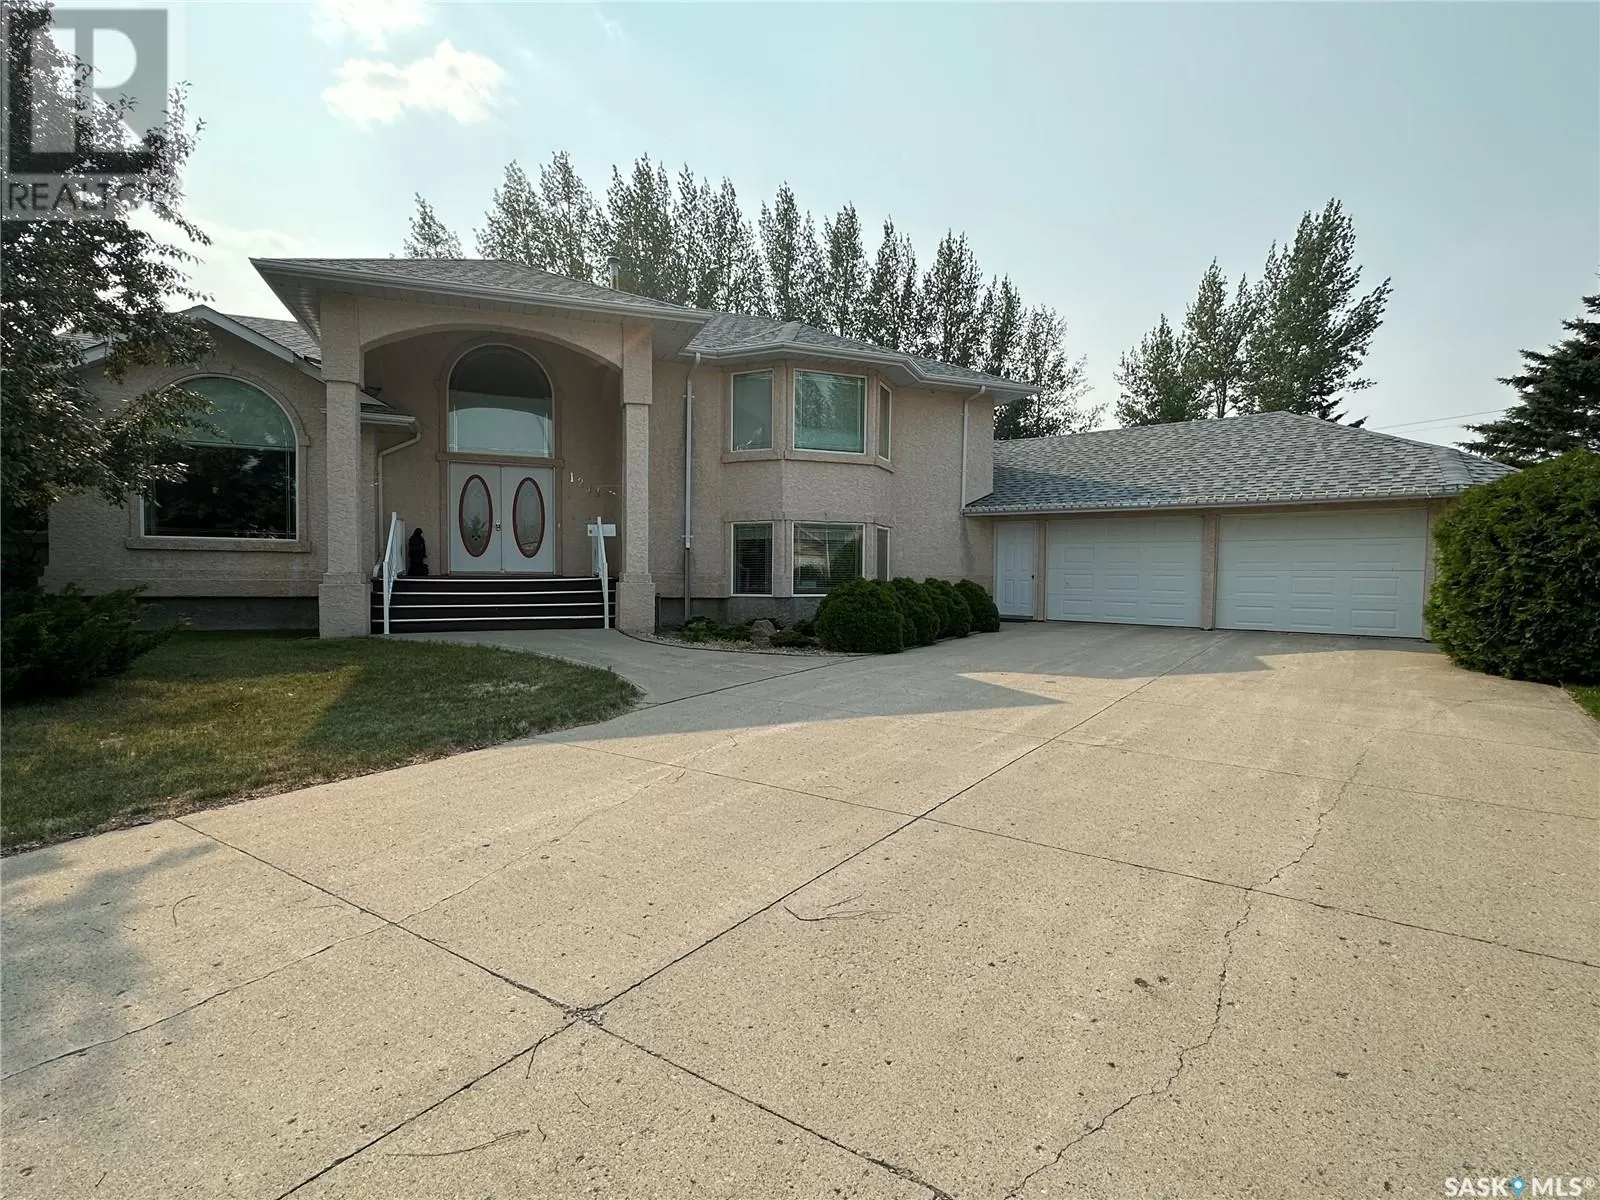 House for rent: 1211 Bence Place, Humboldt, Saskatchewan S0K 2A0